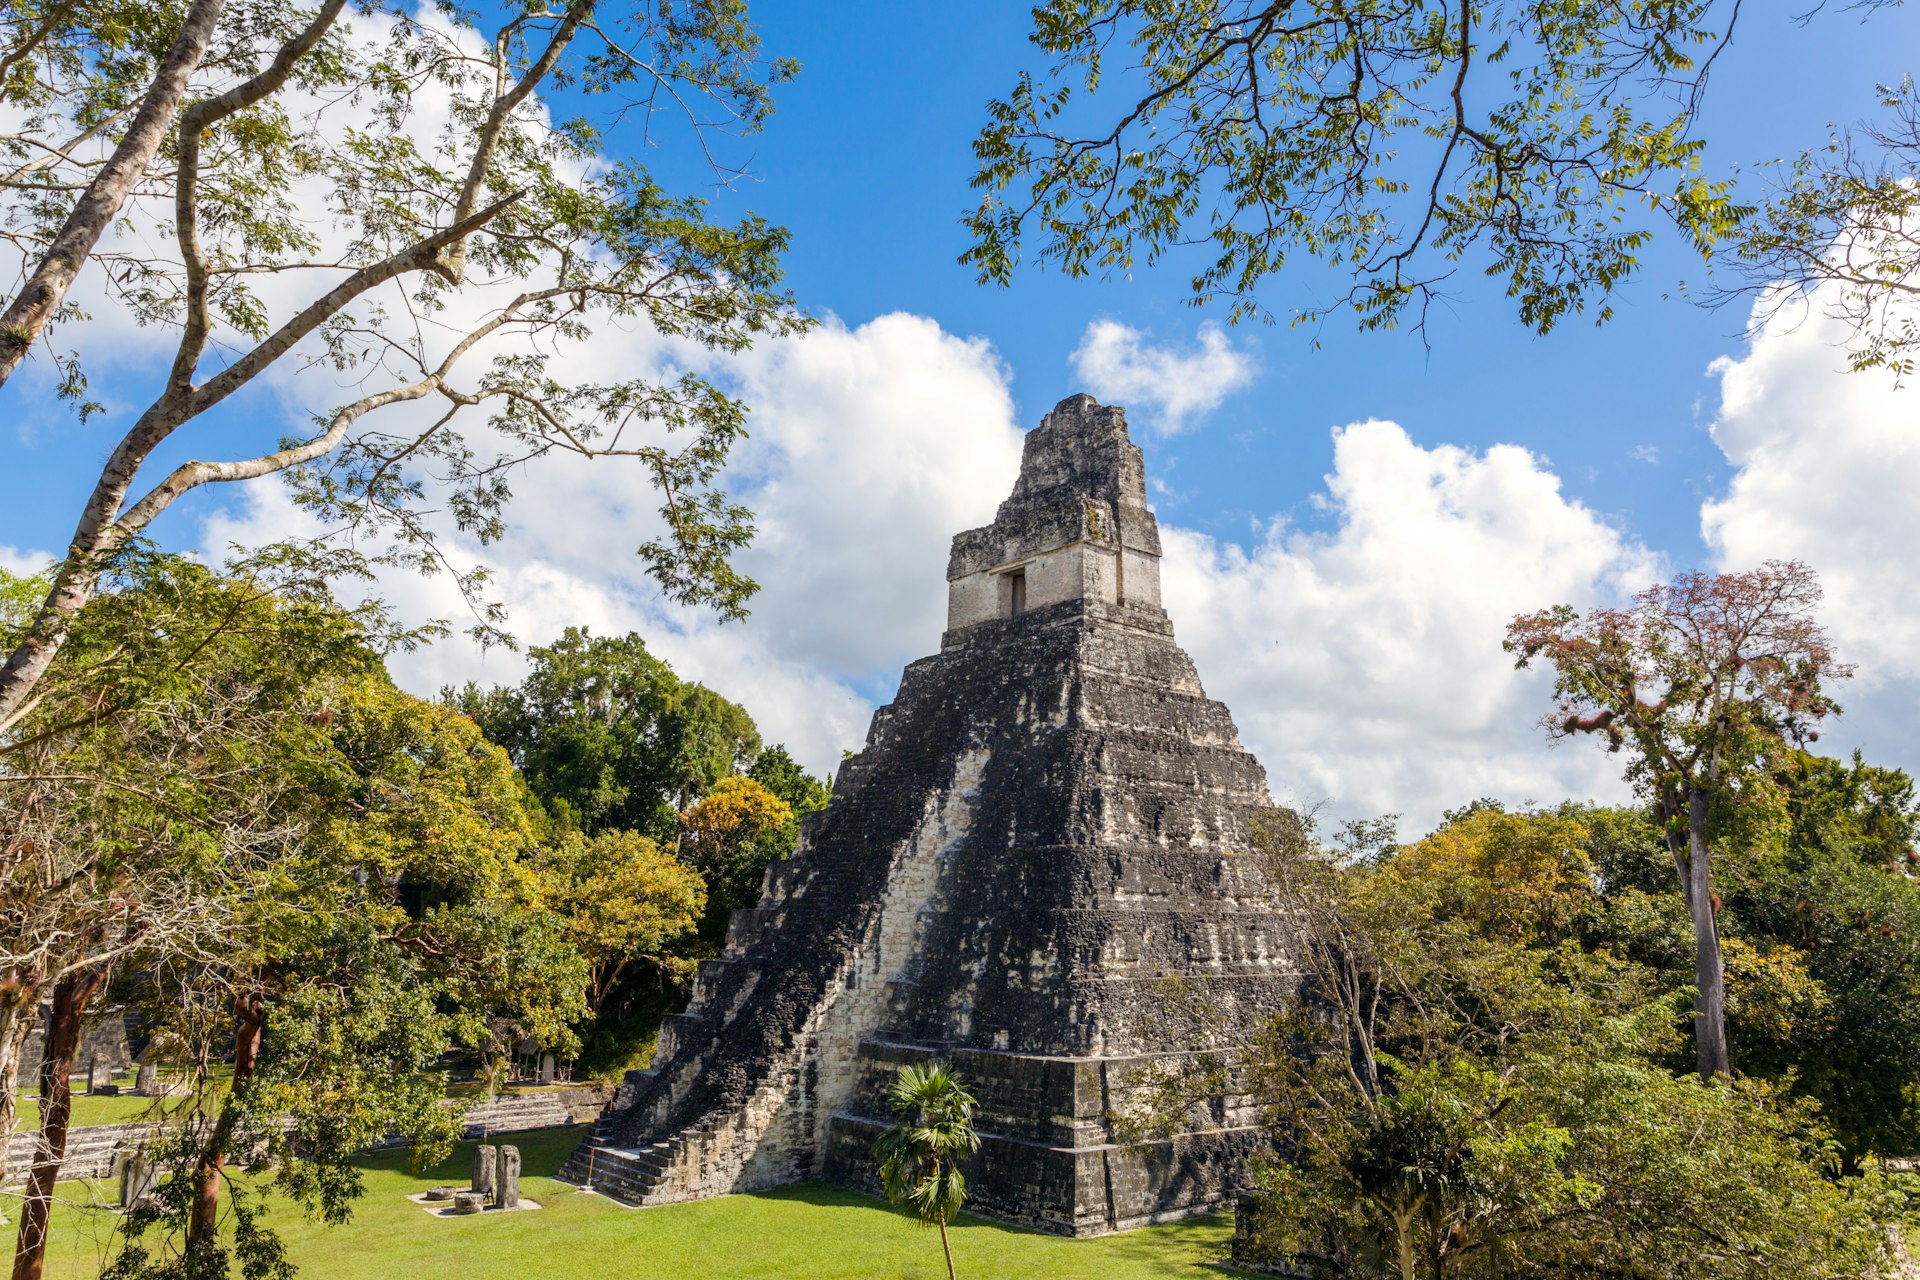 Temple I in the main plaza at Tikal, Guatemala